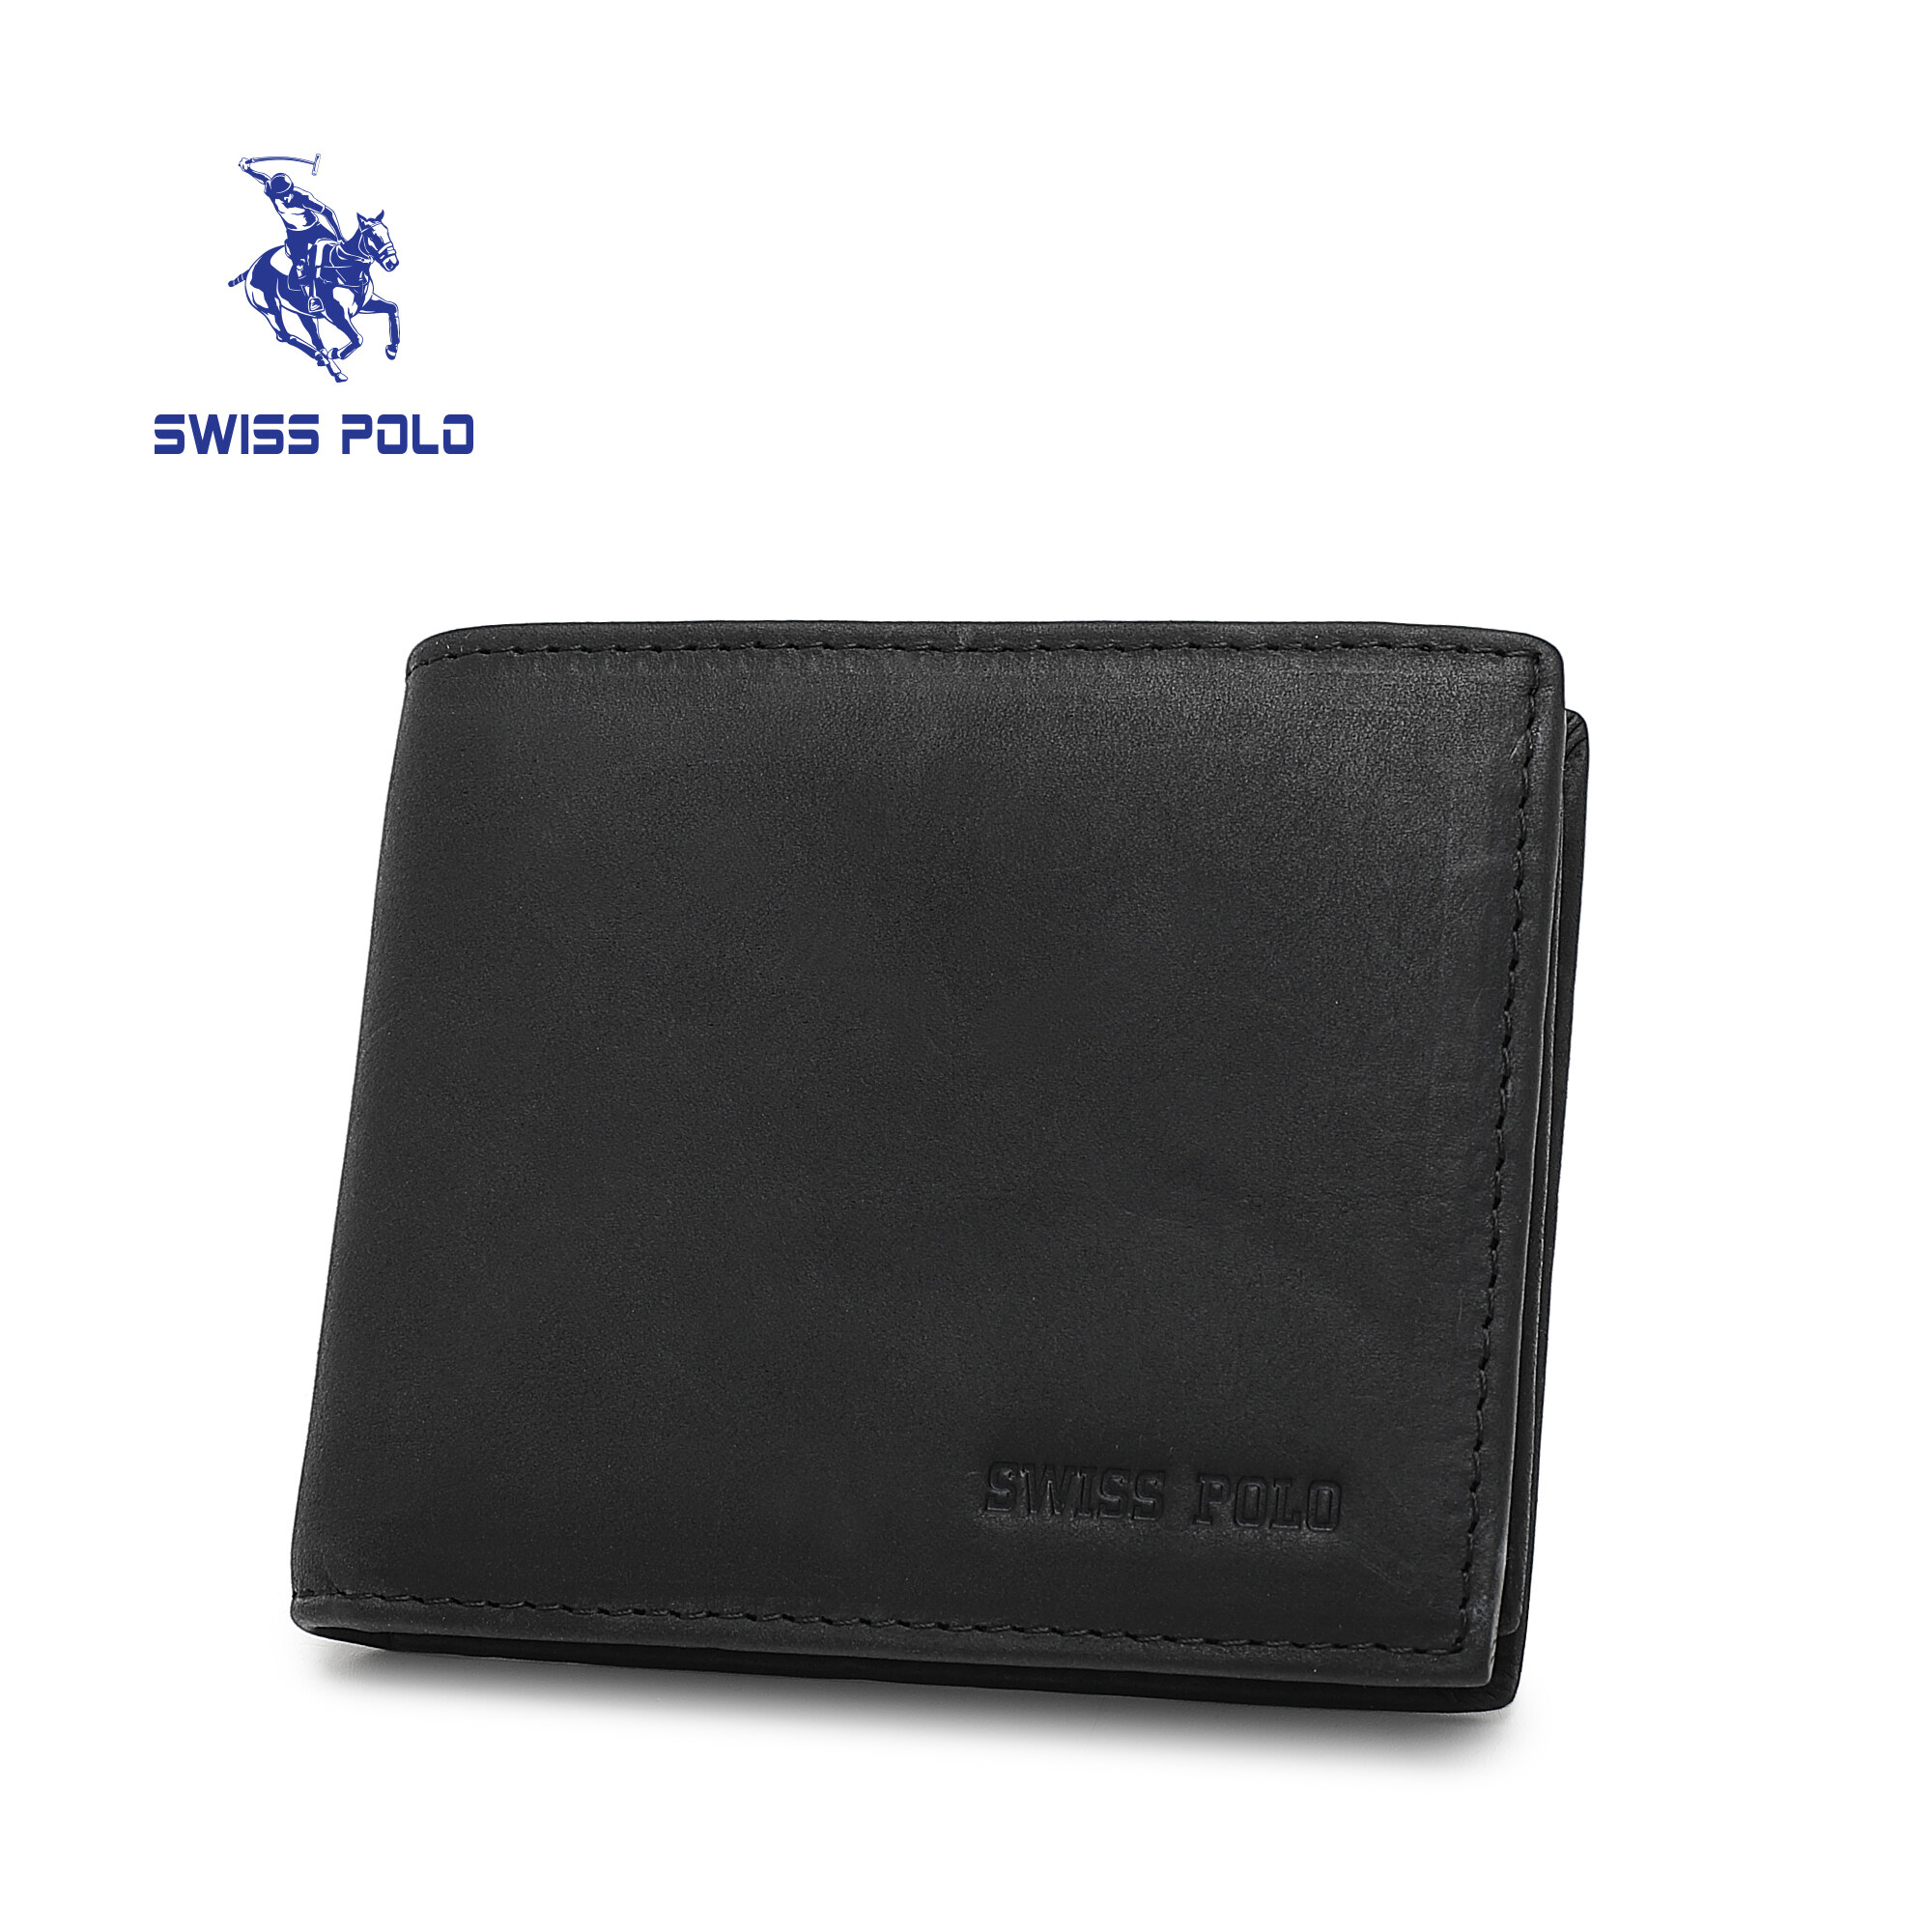 SWISS POLO Genuine Leather RFID Short Wallet SW 189-1 BLACK